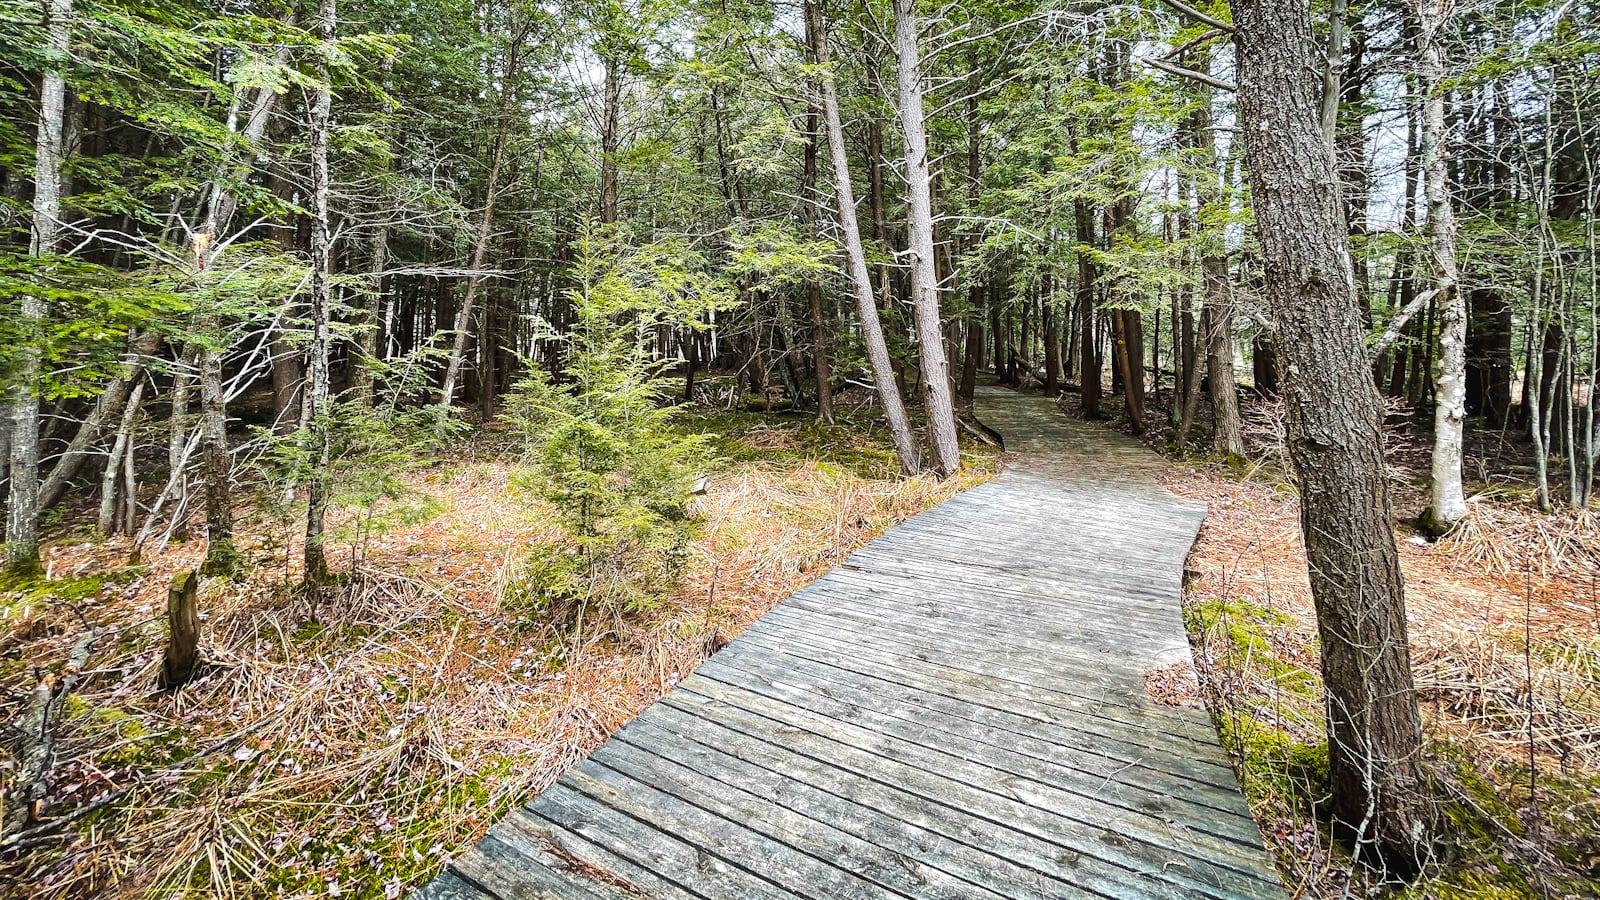 Wooden boardwalk in spring forest